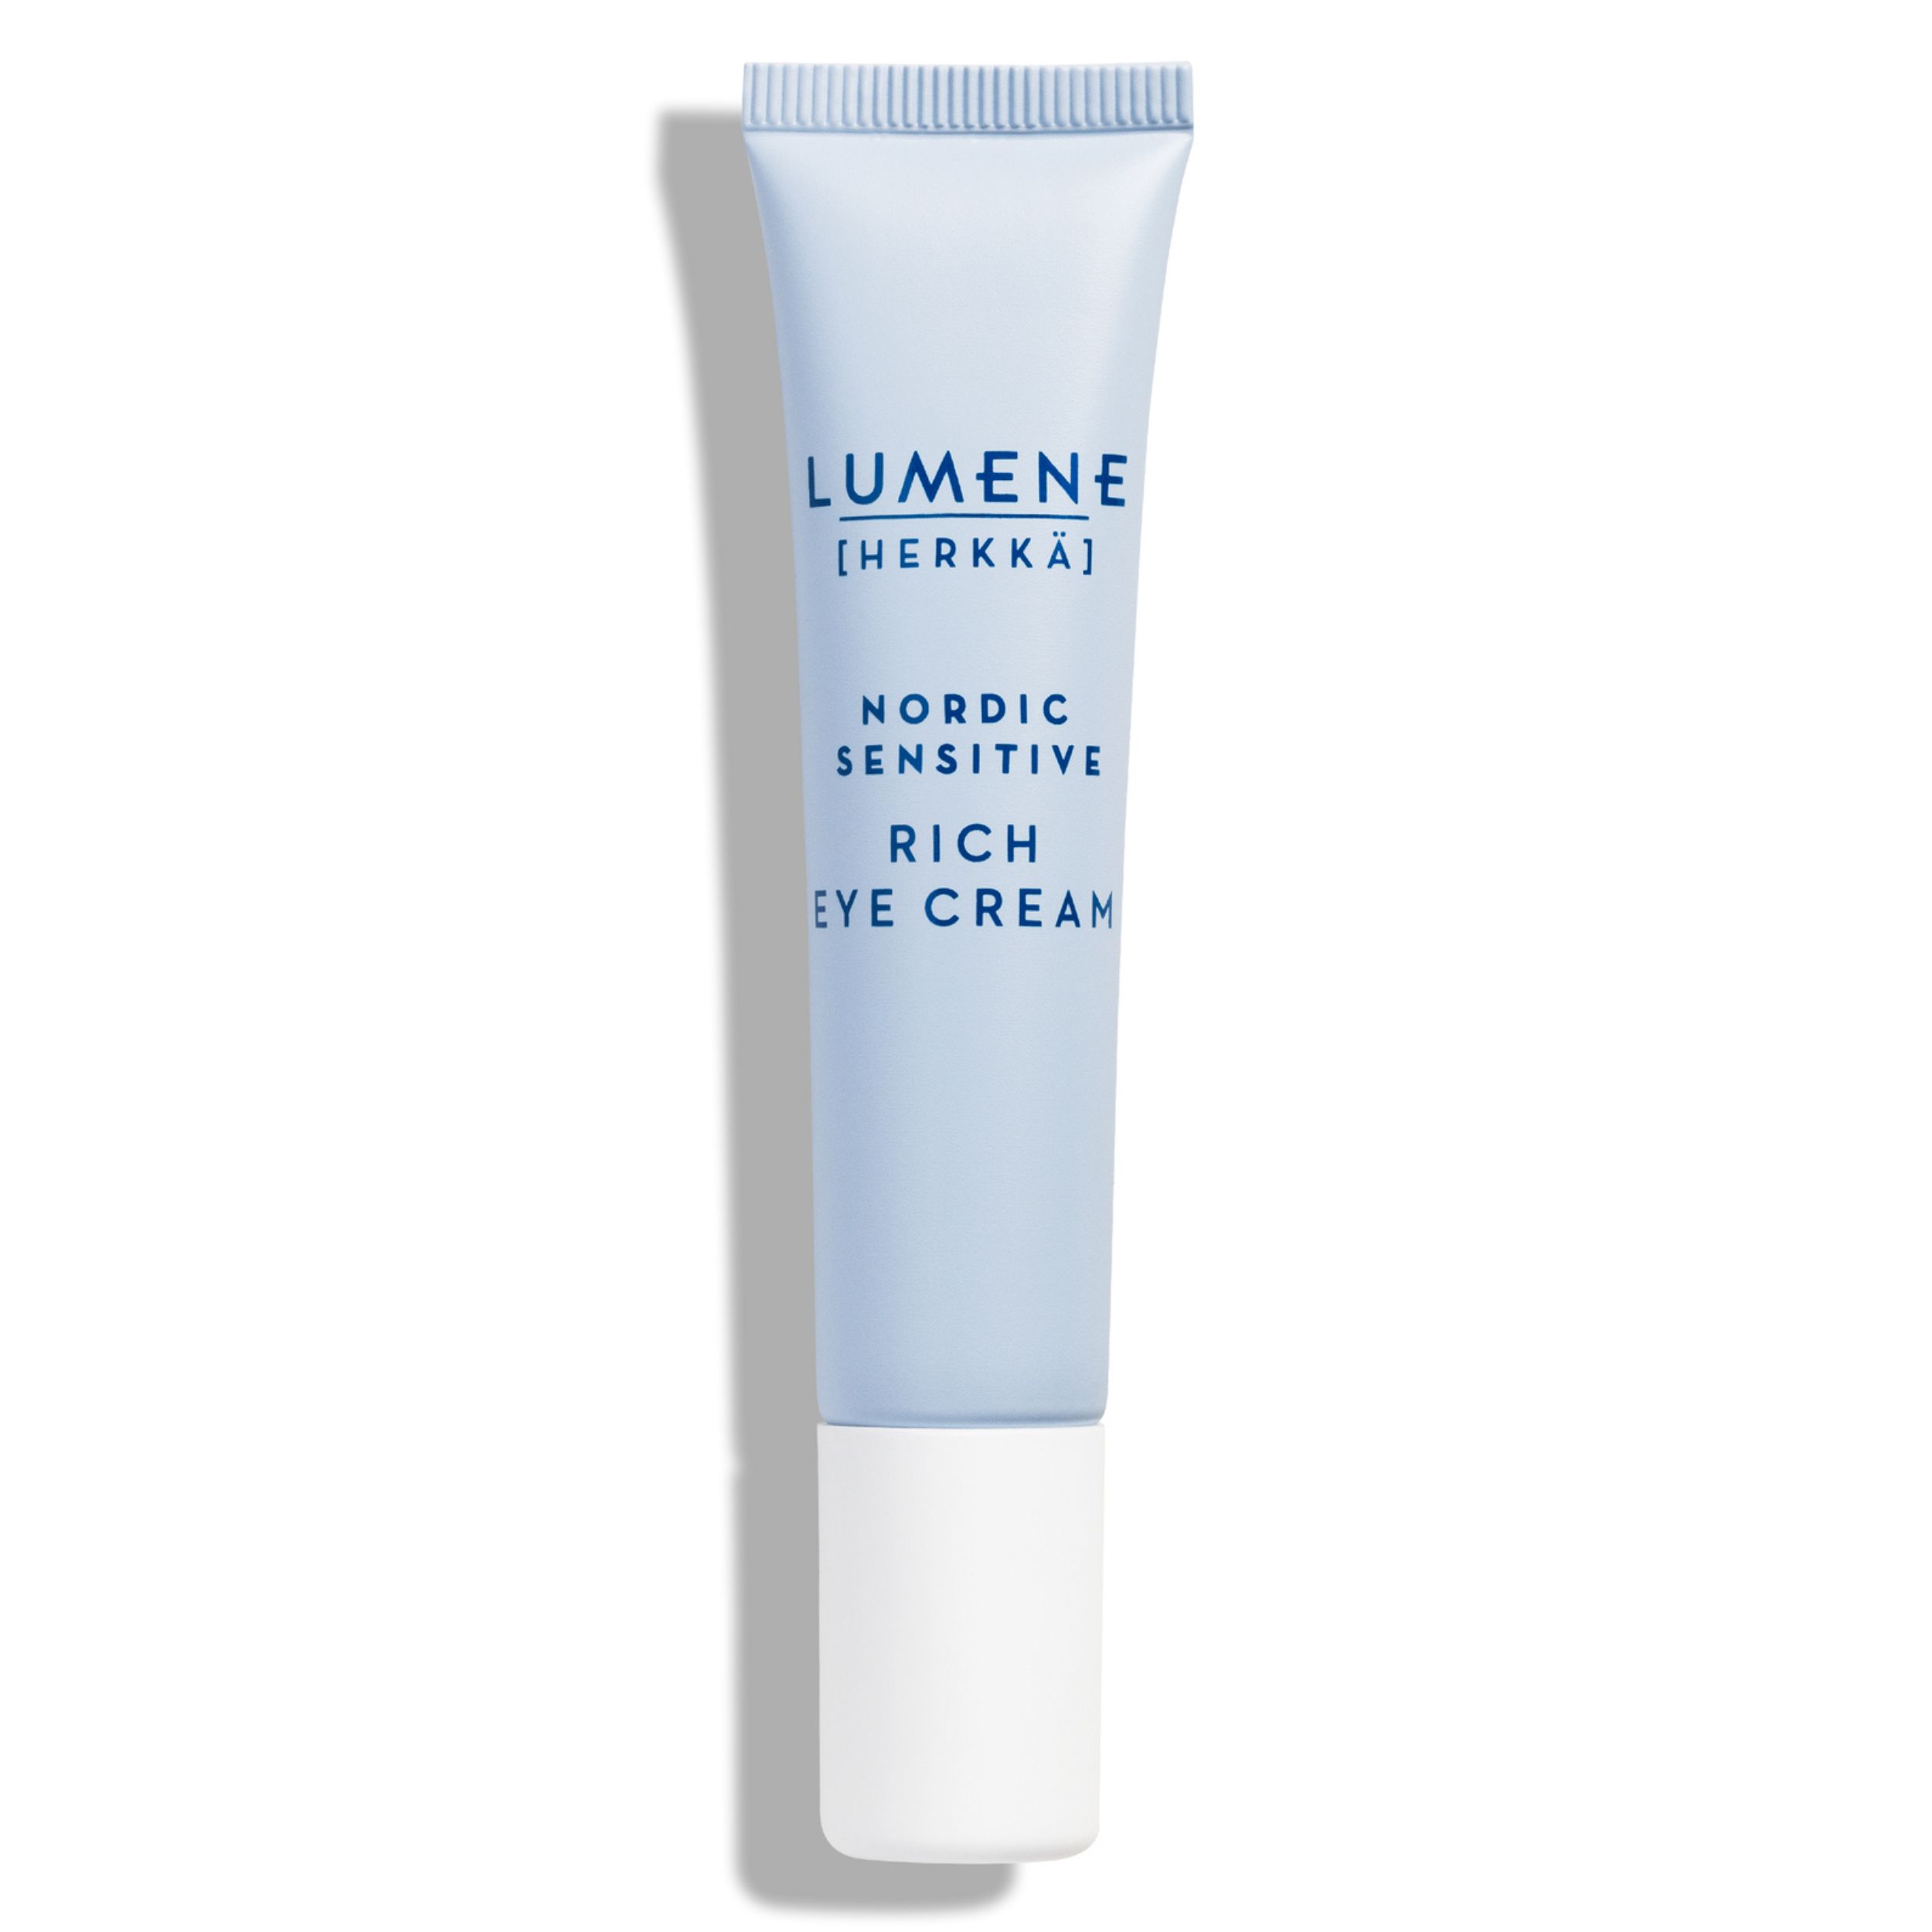 Lumene Nordic Sensitive Rich Eye Cream, 15 ml